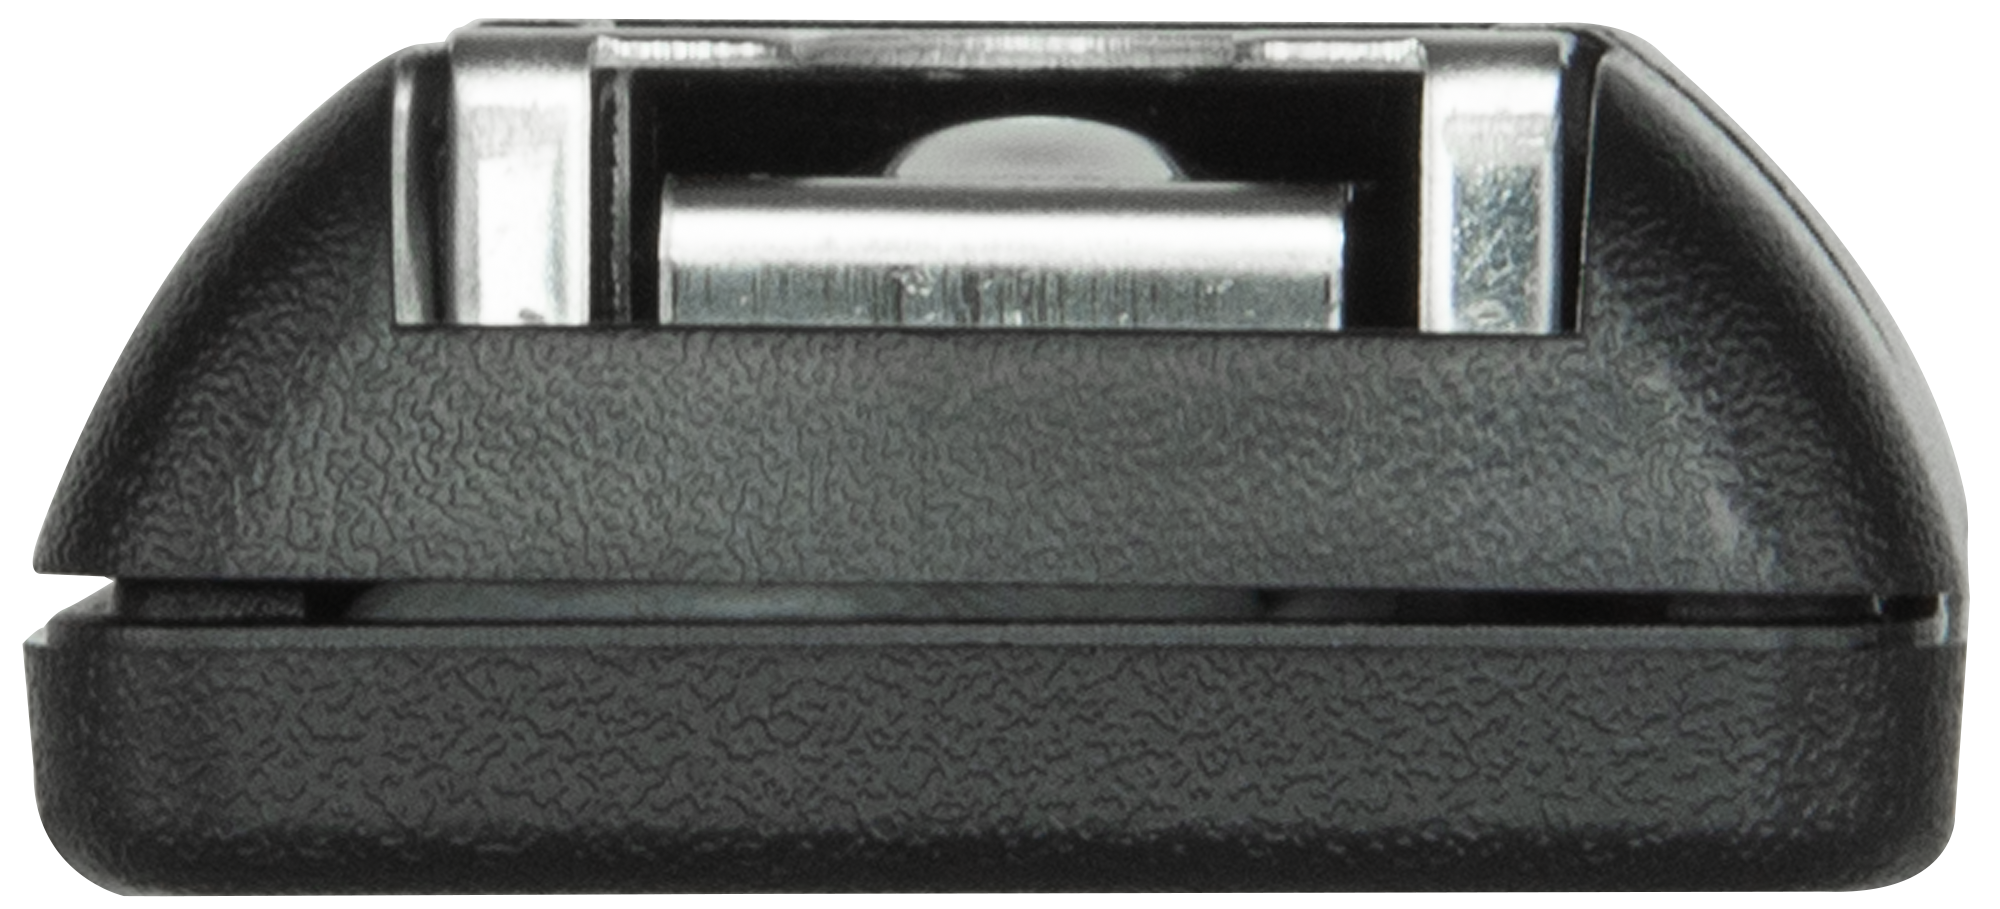 MICROPHONE BRACKET WITH METAL INSERT - SUIT MC553B